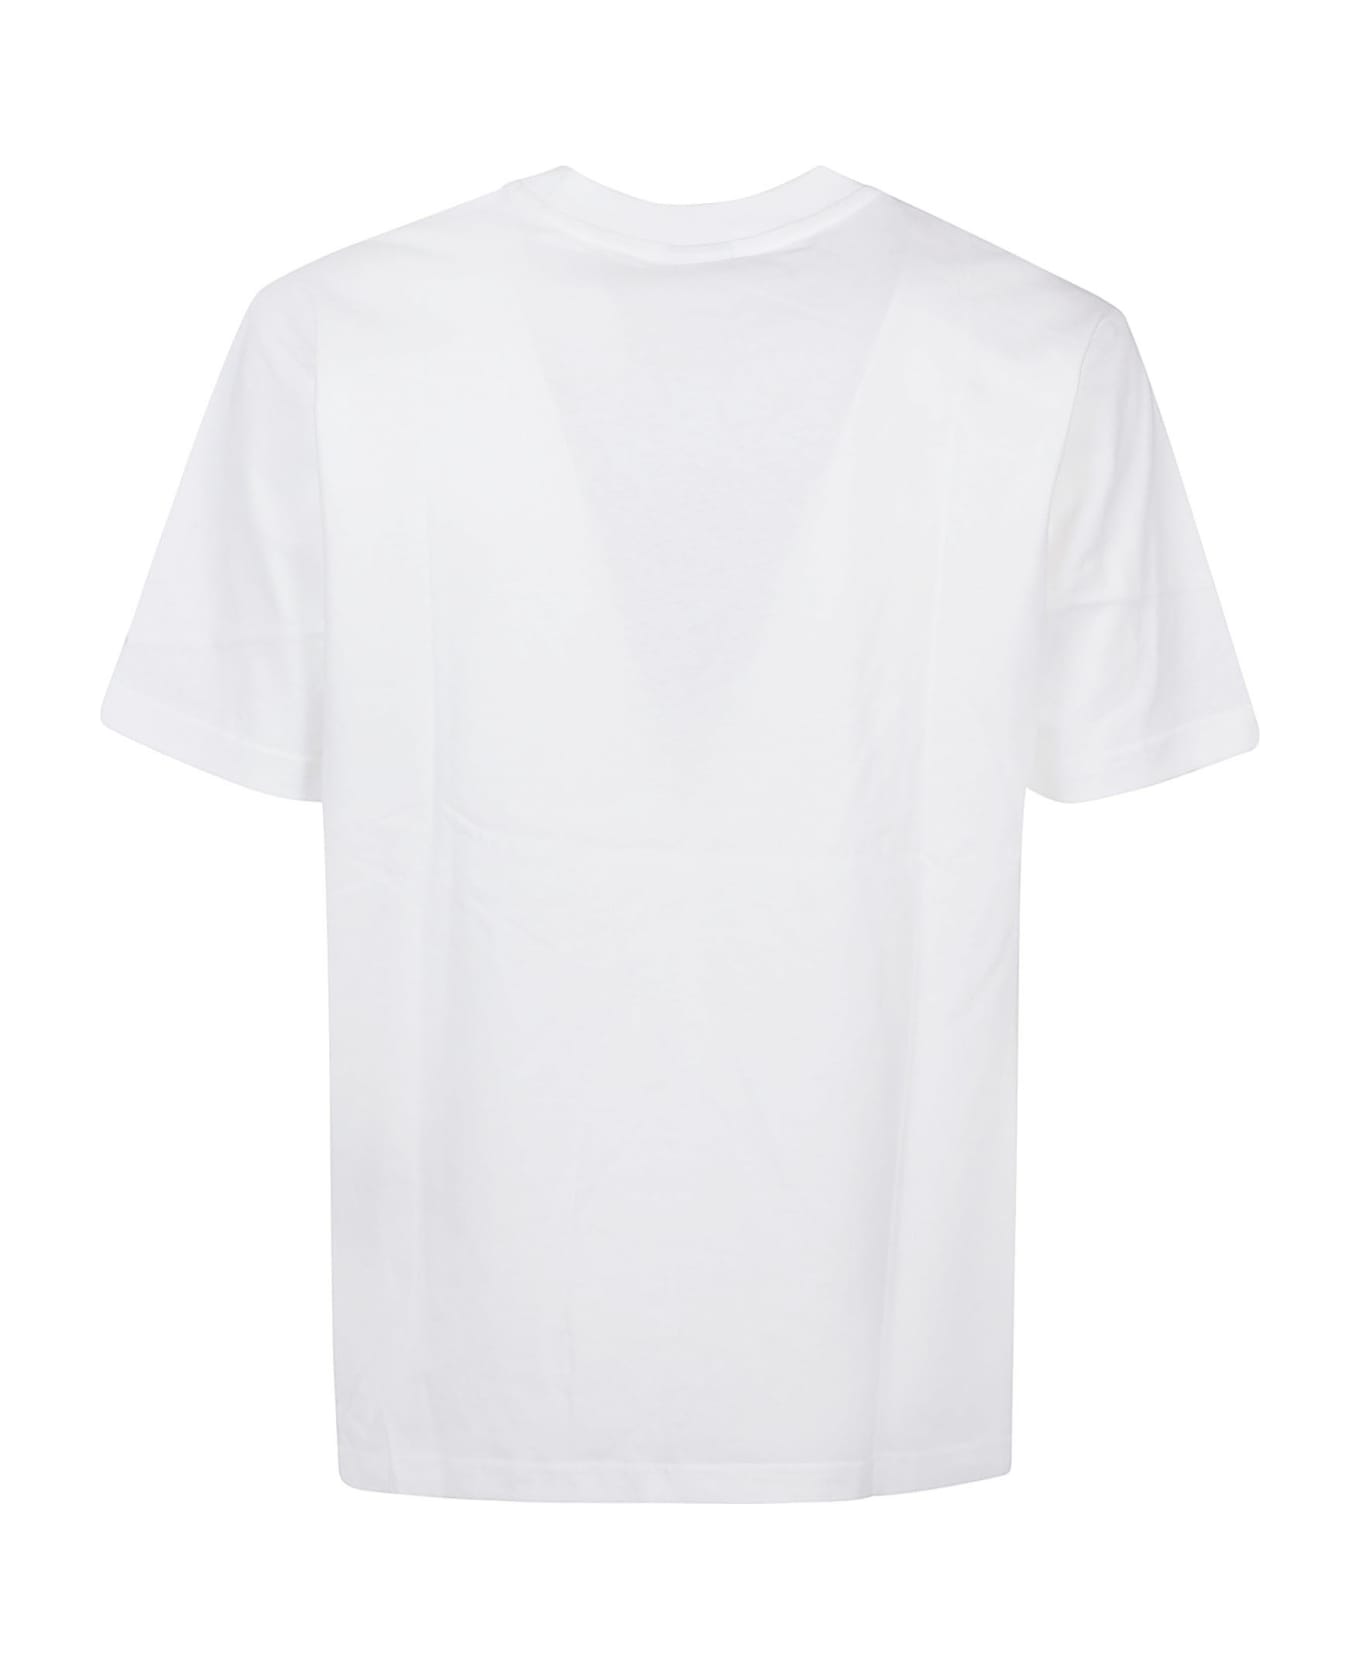 New Balance Athletics Models Never Age Relaxed T-shirt - White